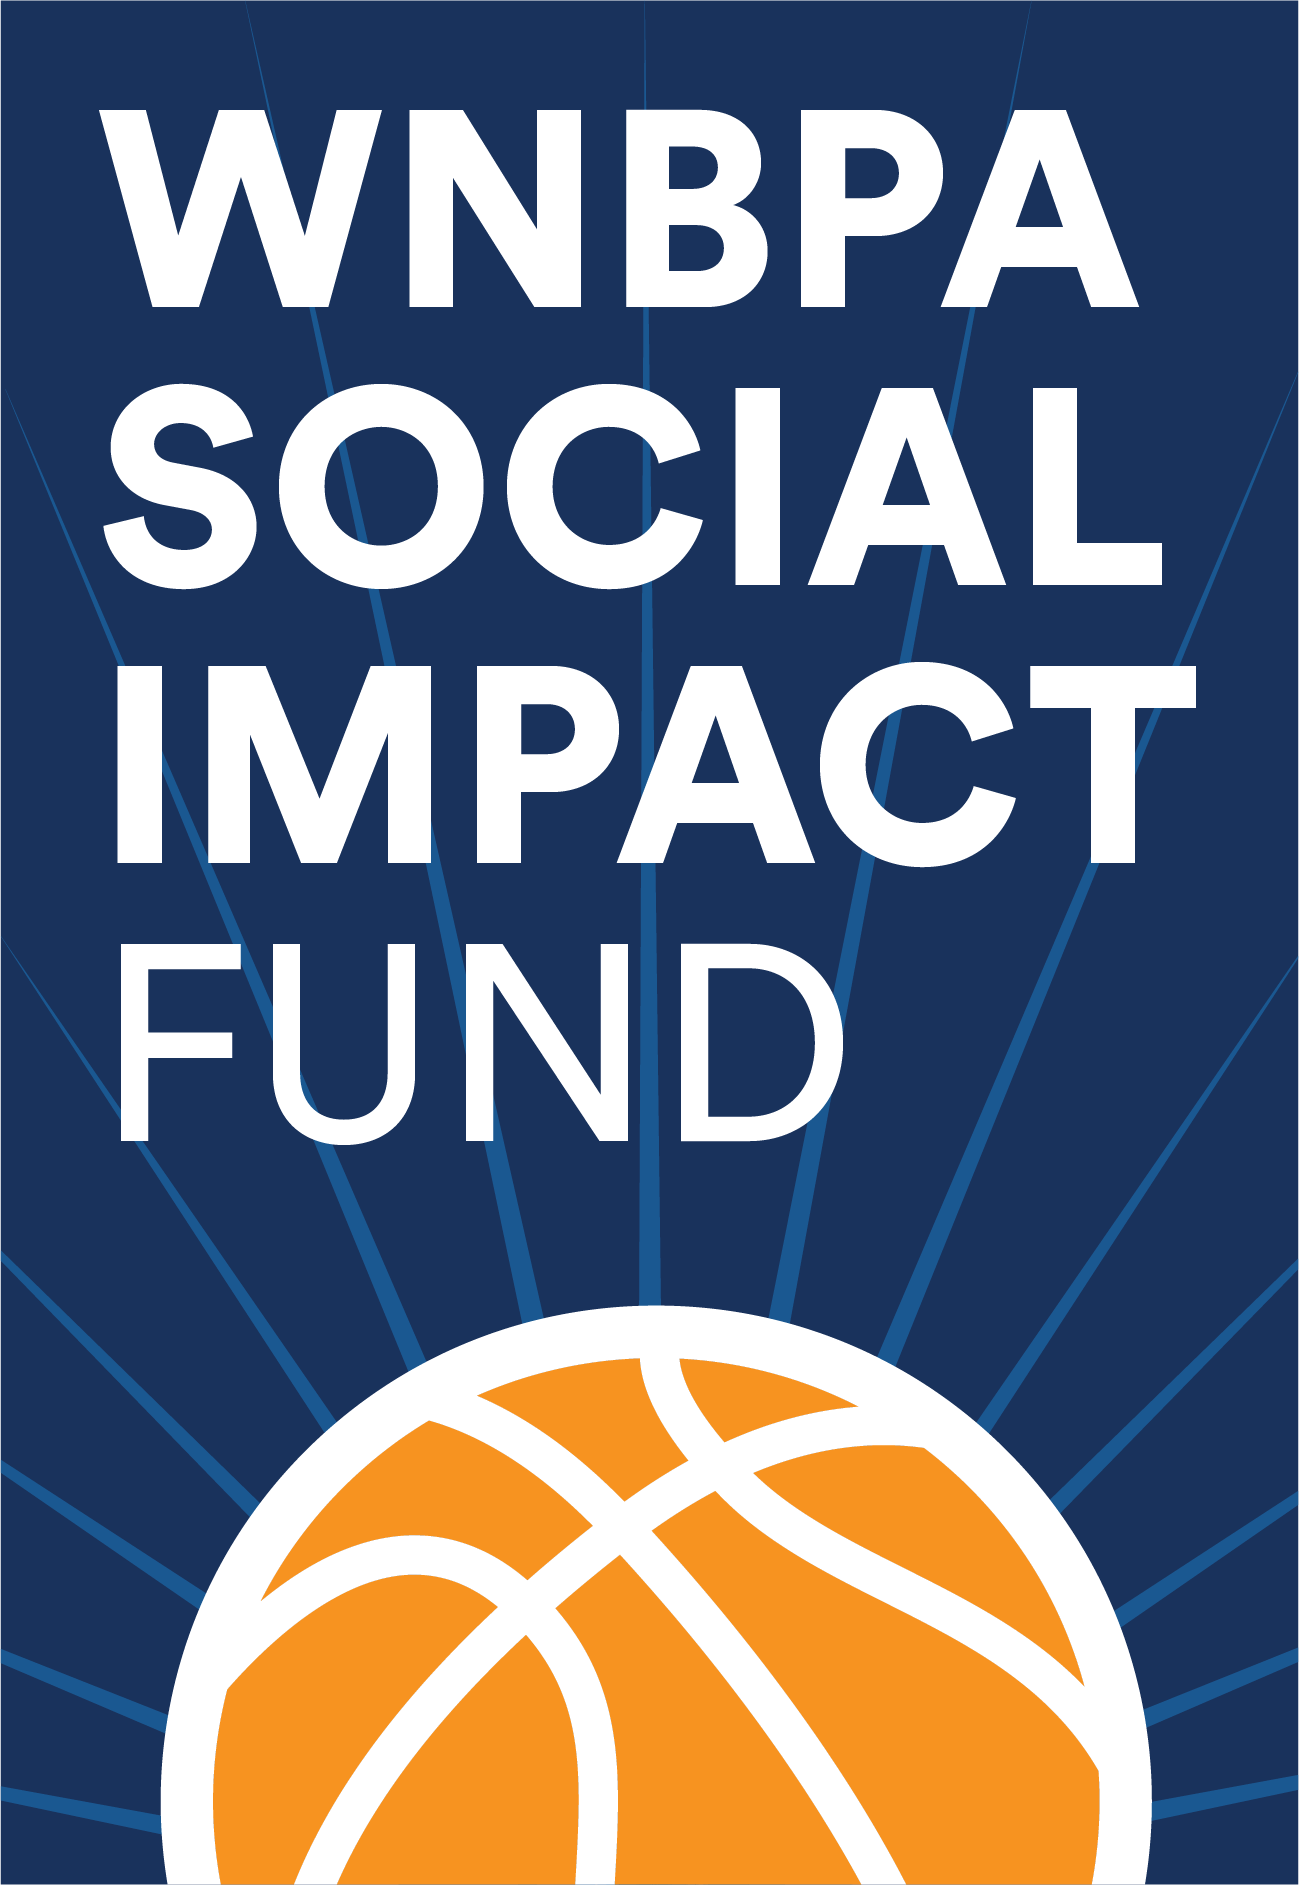 The WNBPA Social Impact Fund logo